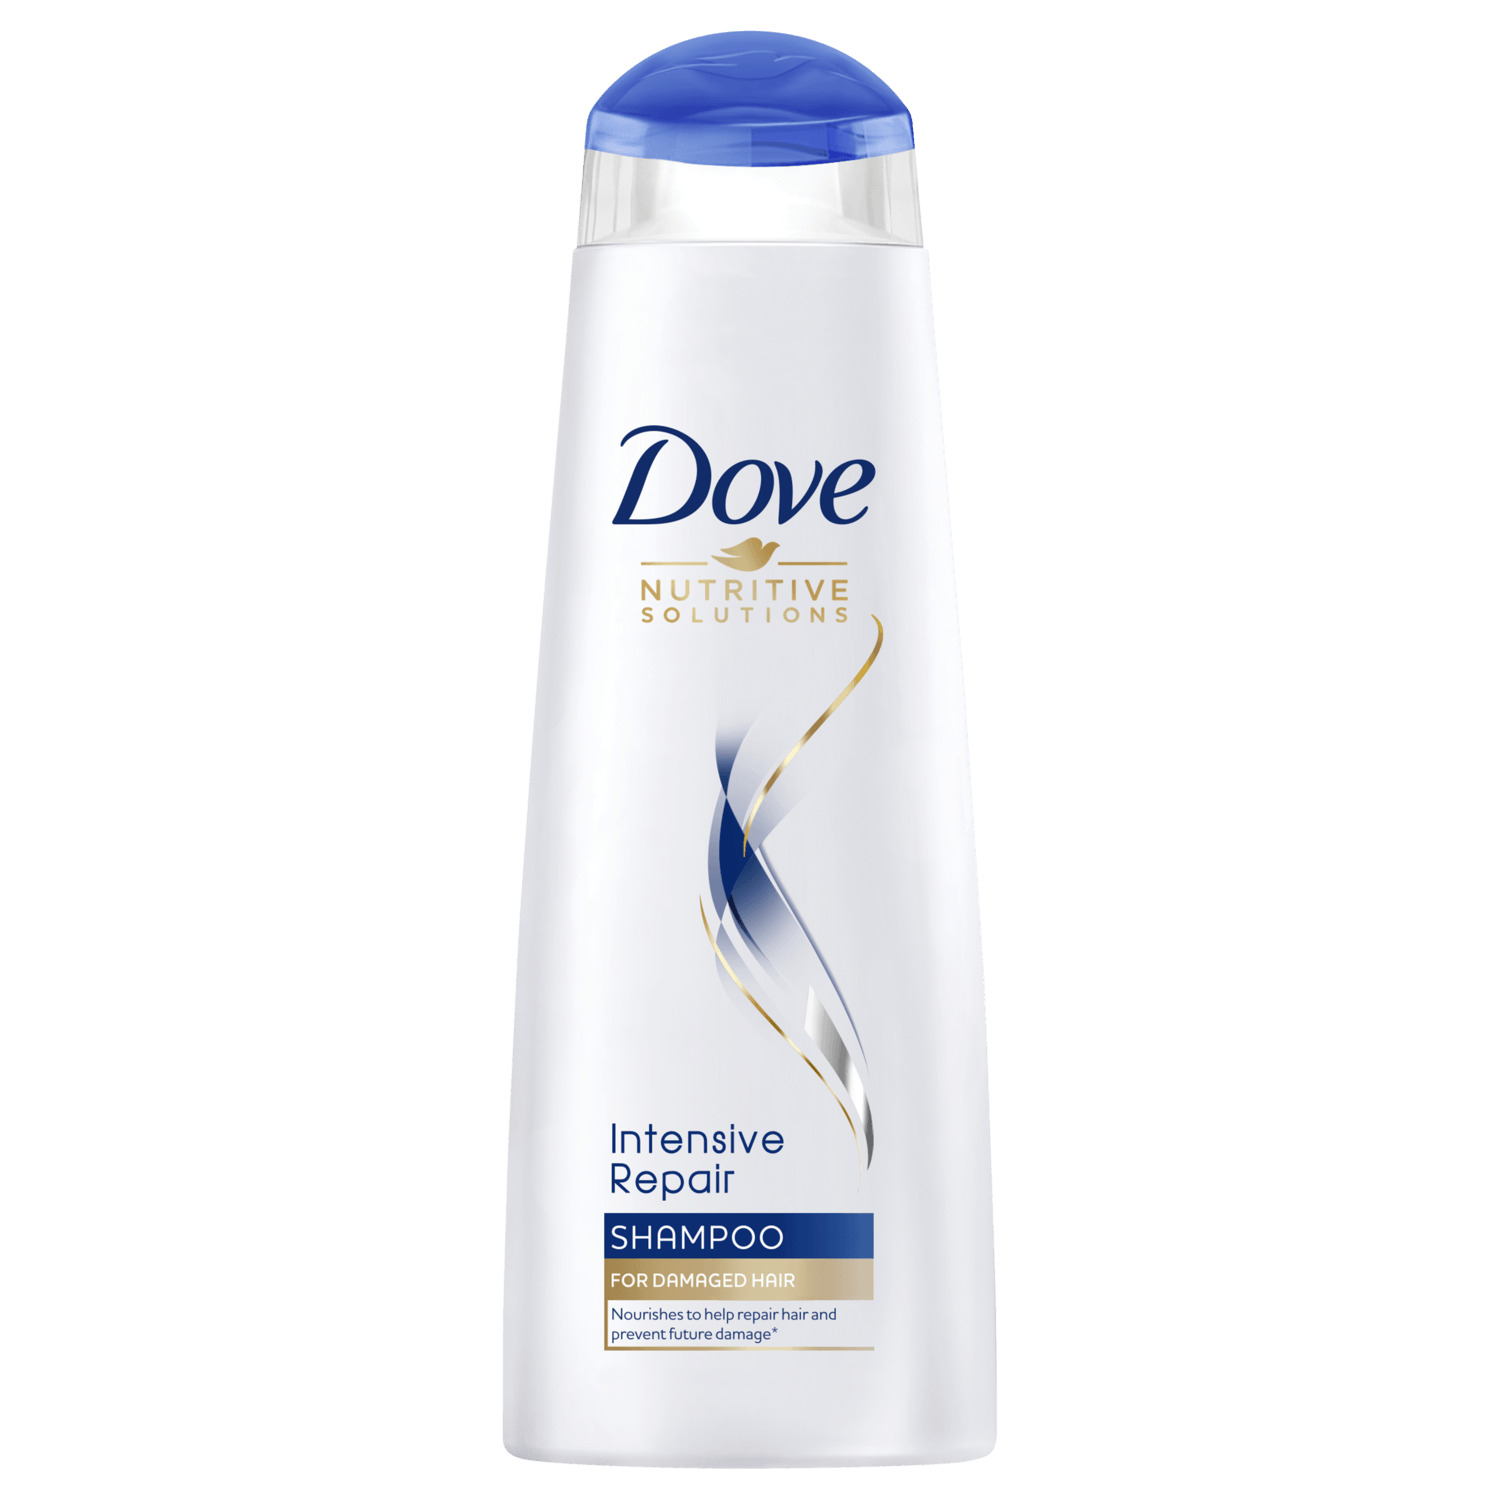 Dove Shampoo Logo - Dove shampoos | Find your perfect shampoo match - Dove